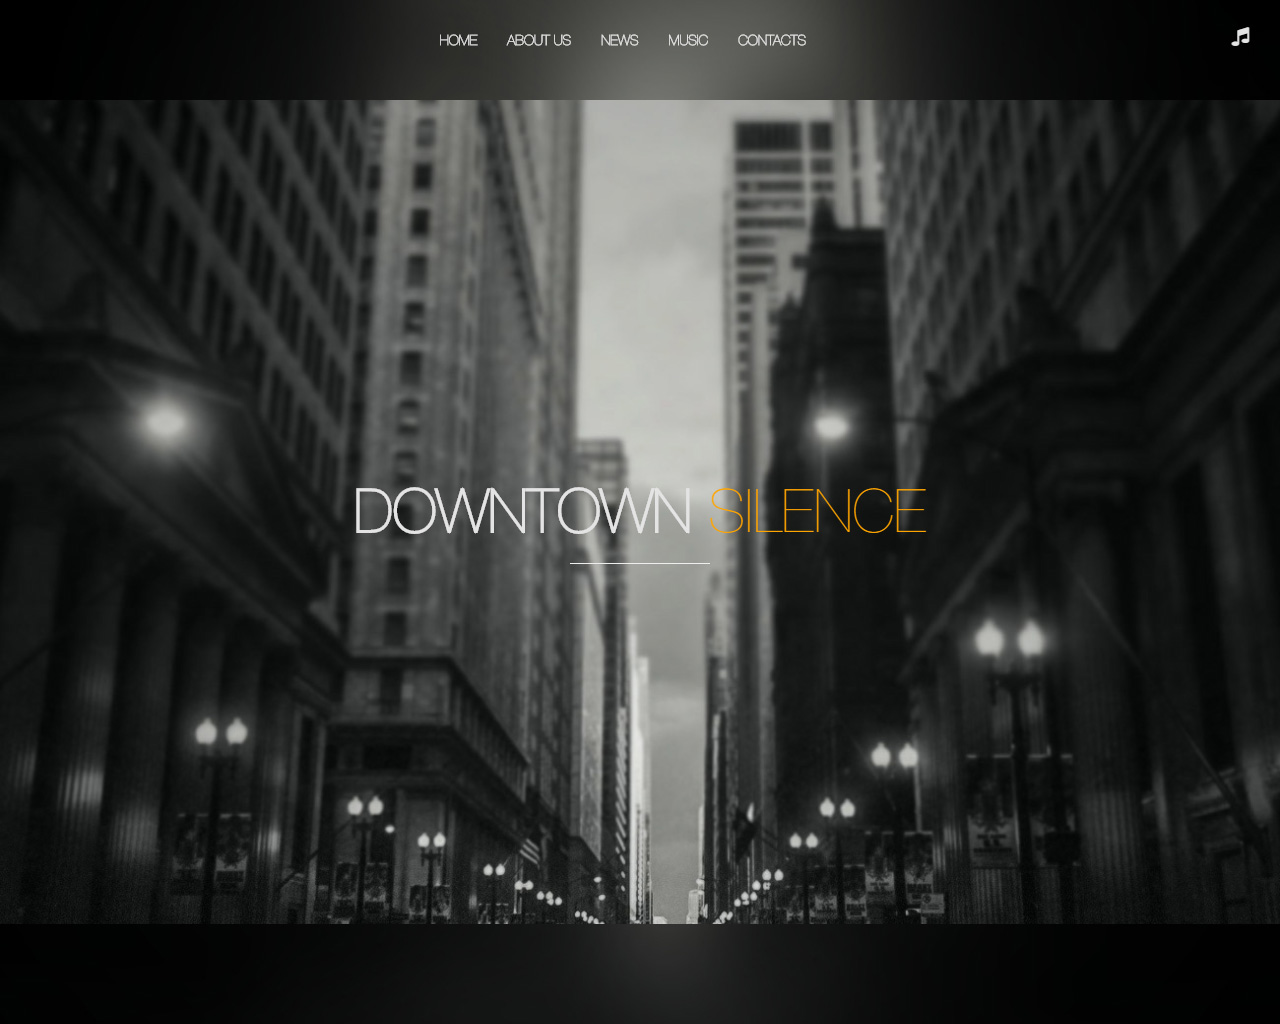 DowntownSilence